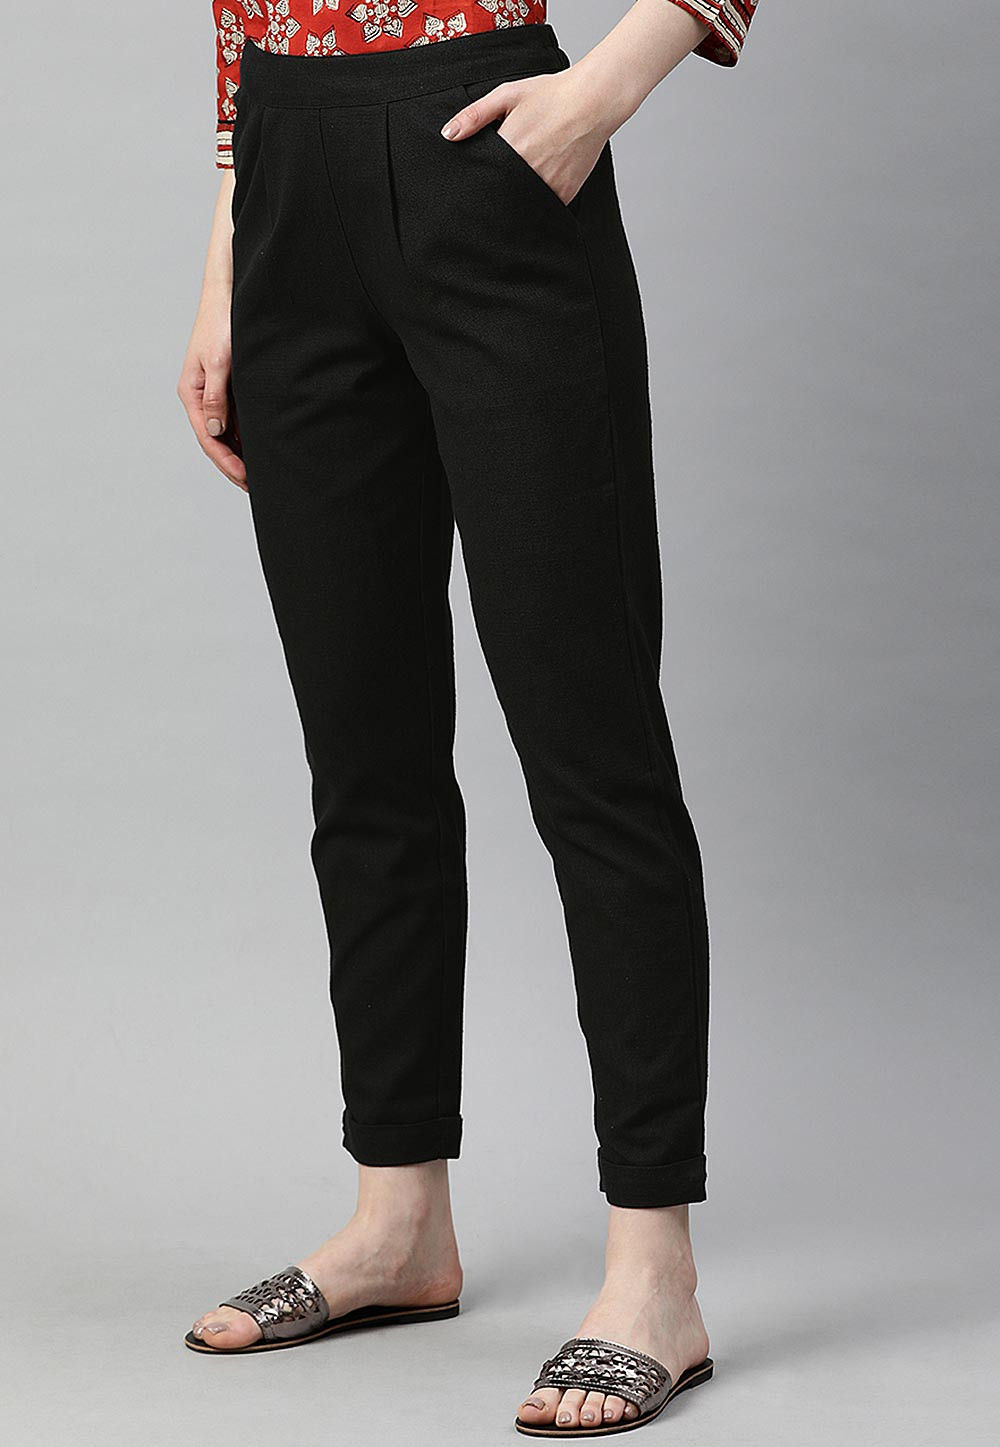 Solid Color Cotton Pant in Black : BMX33